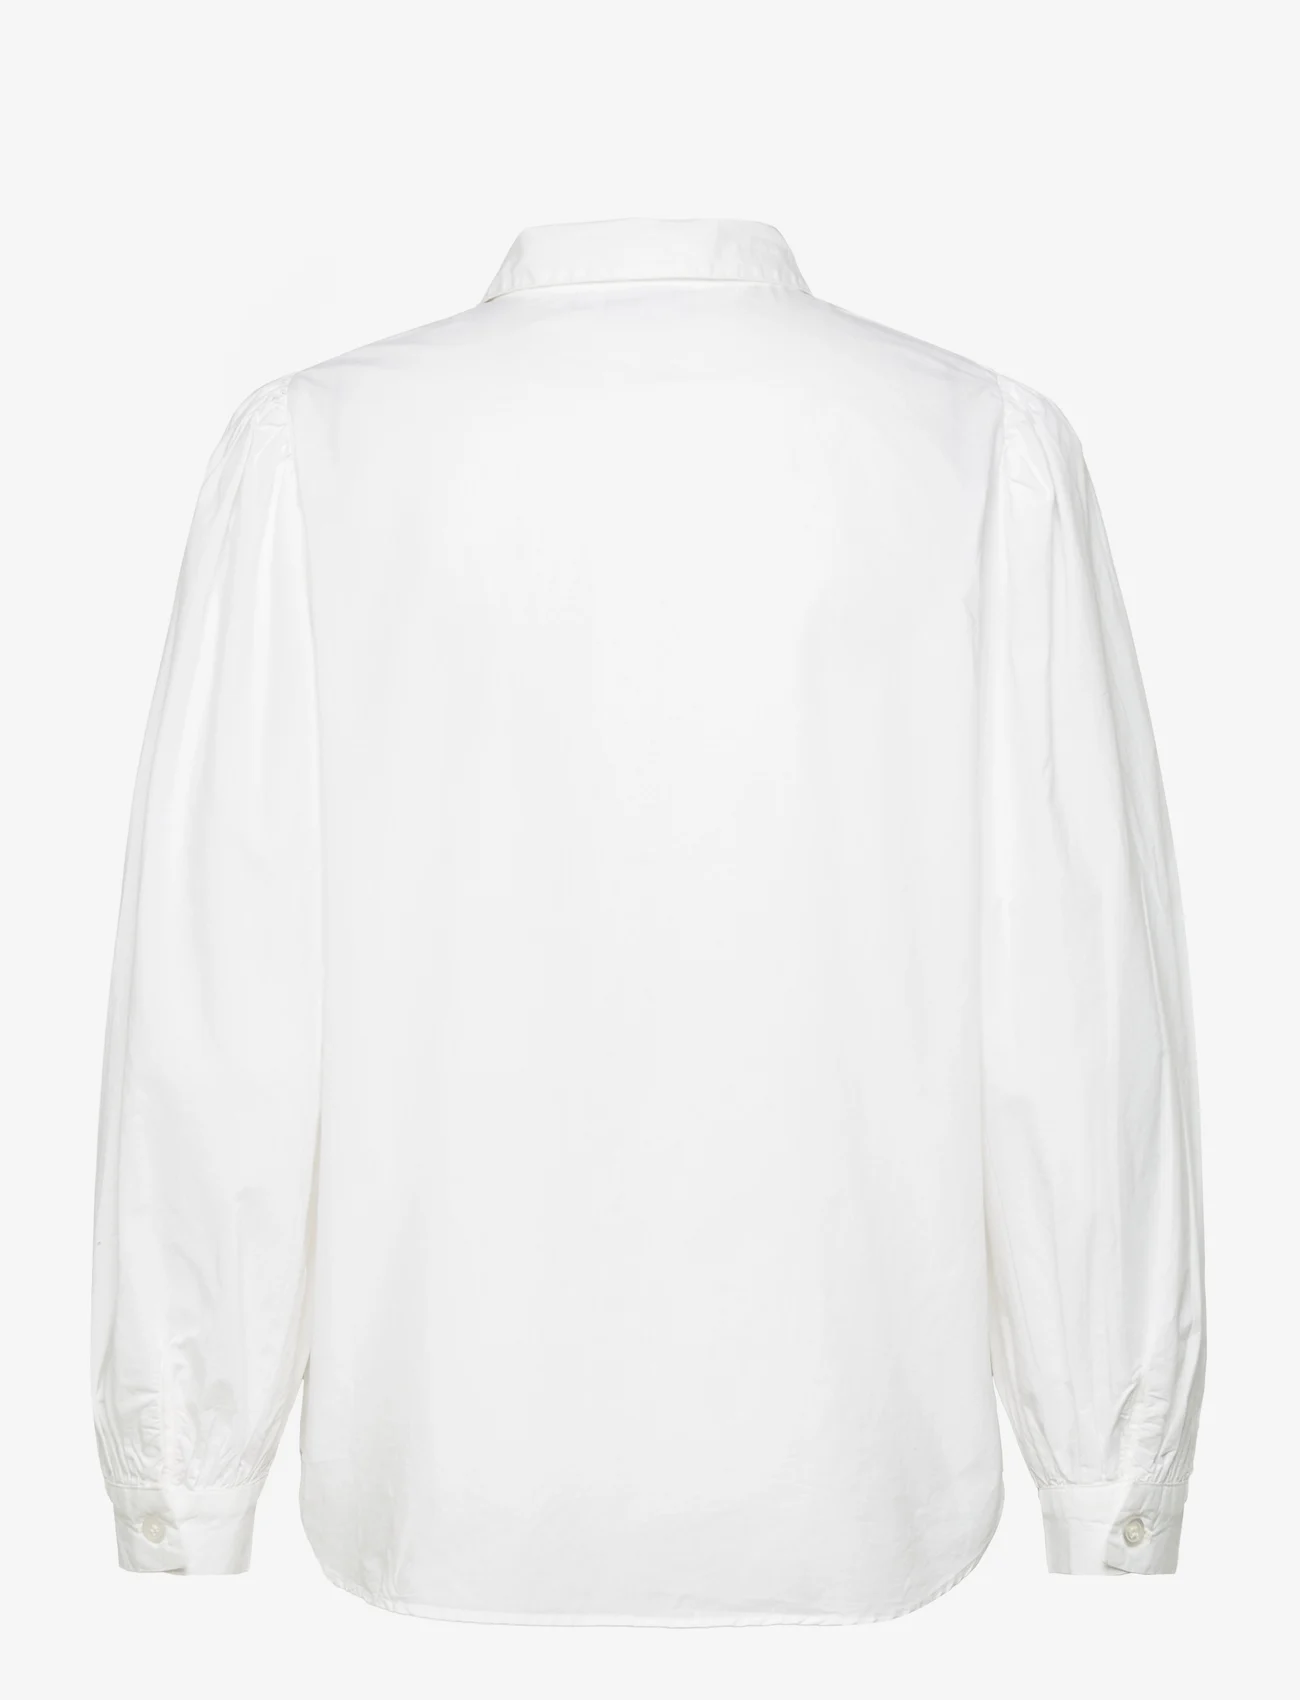 Saint Tropez - KecelinSZ Shirt - långärmade blusar - bright white - 1